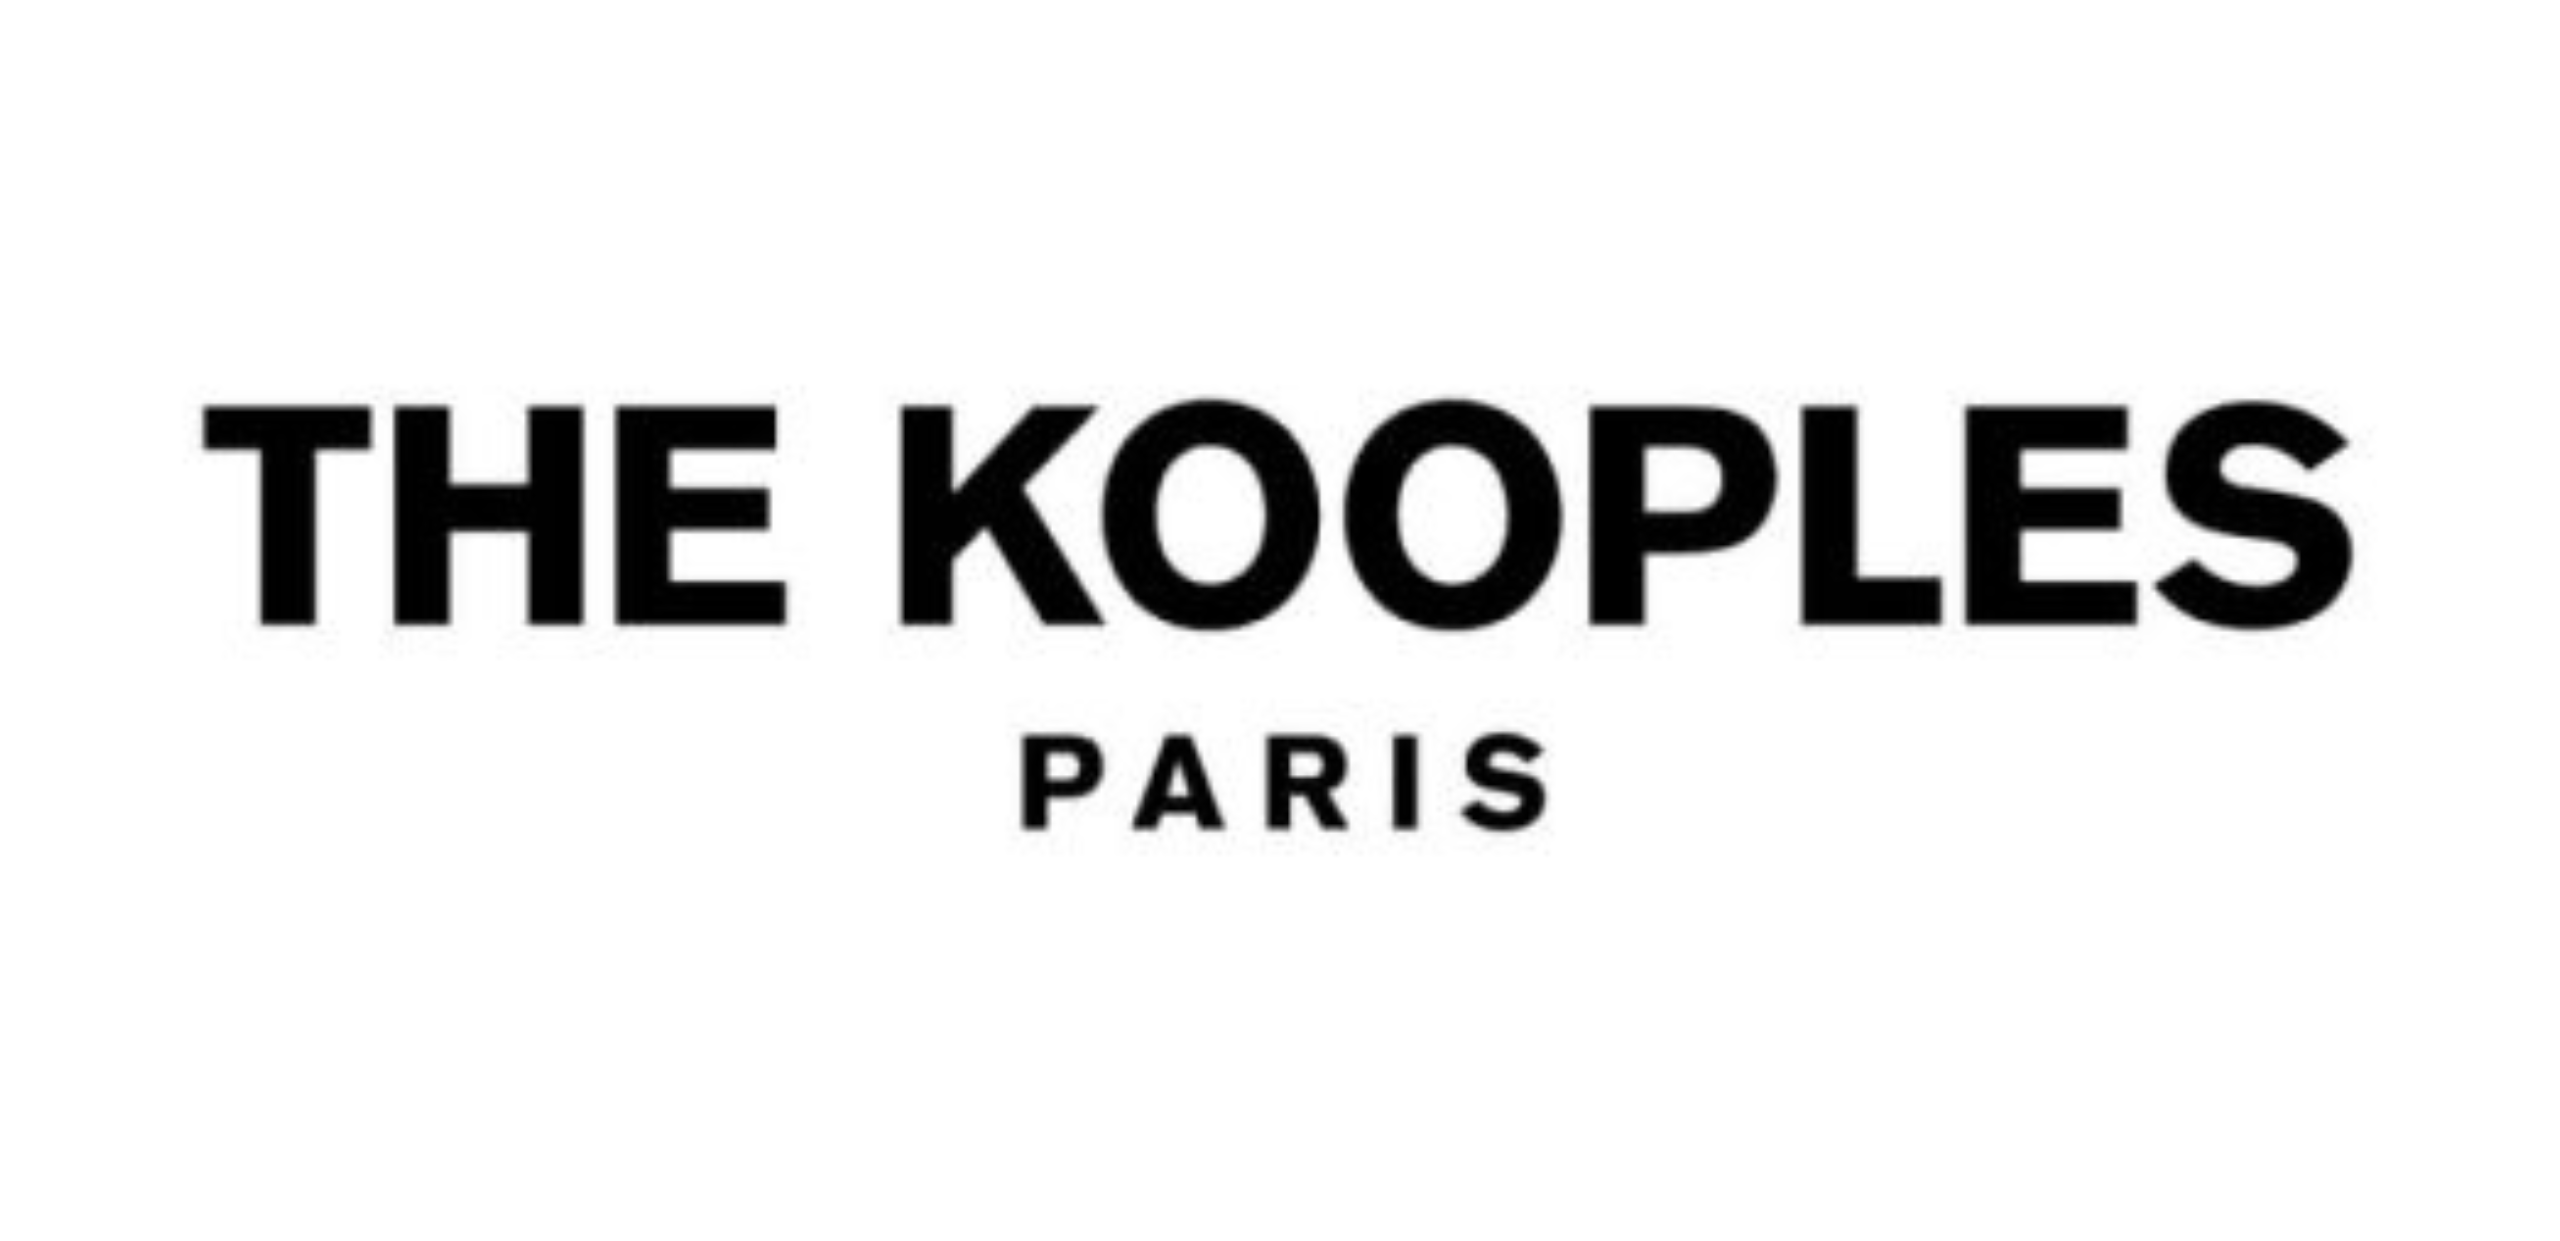 The Kooples Paris